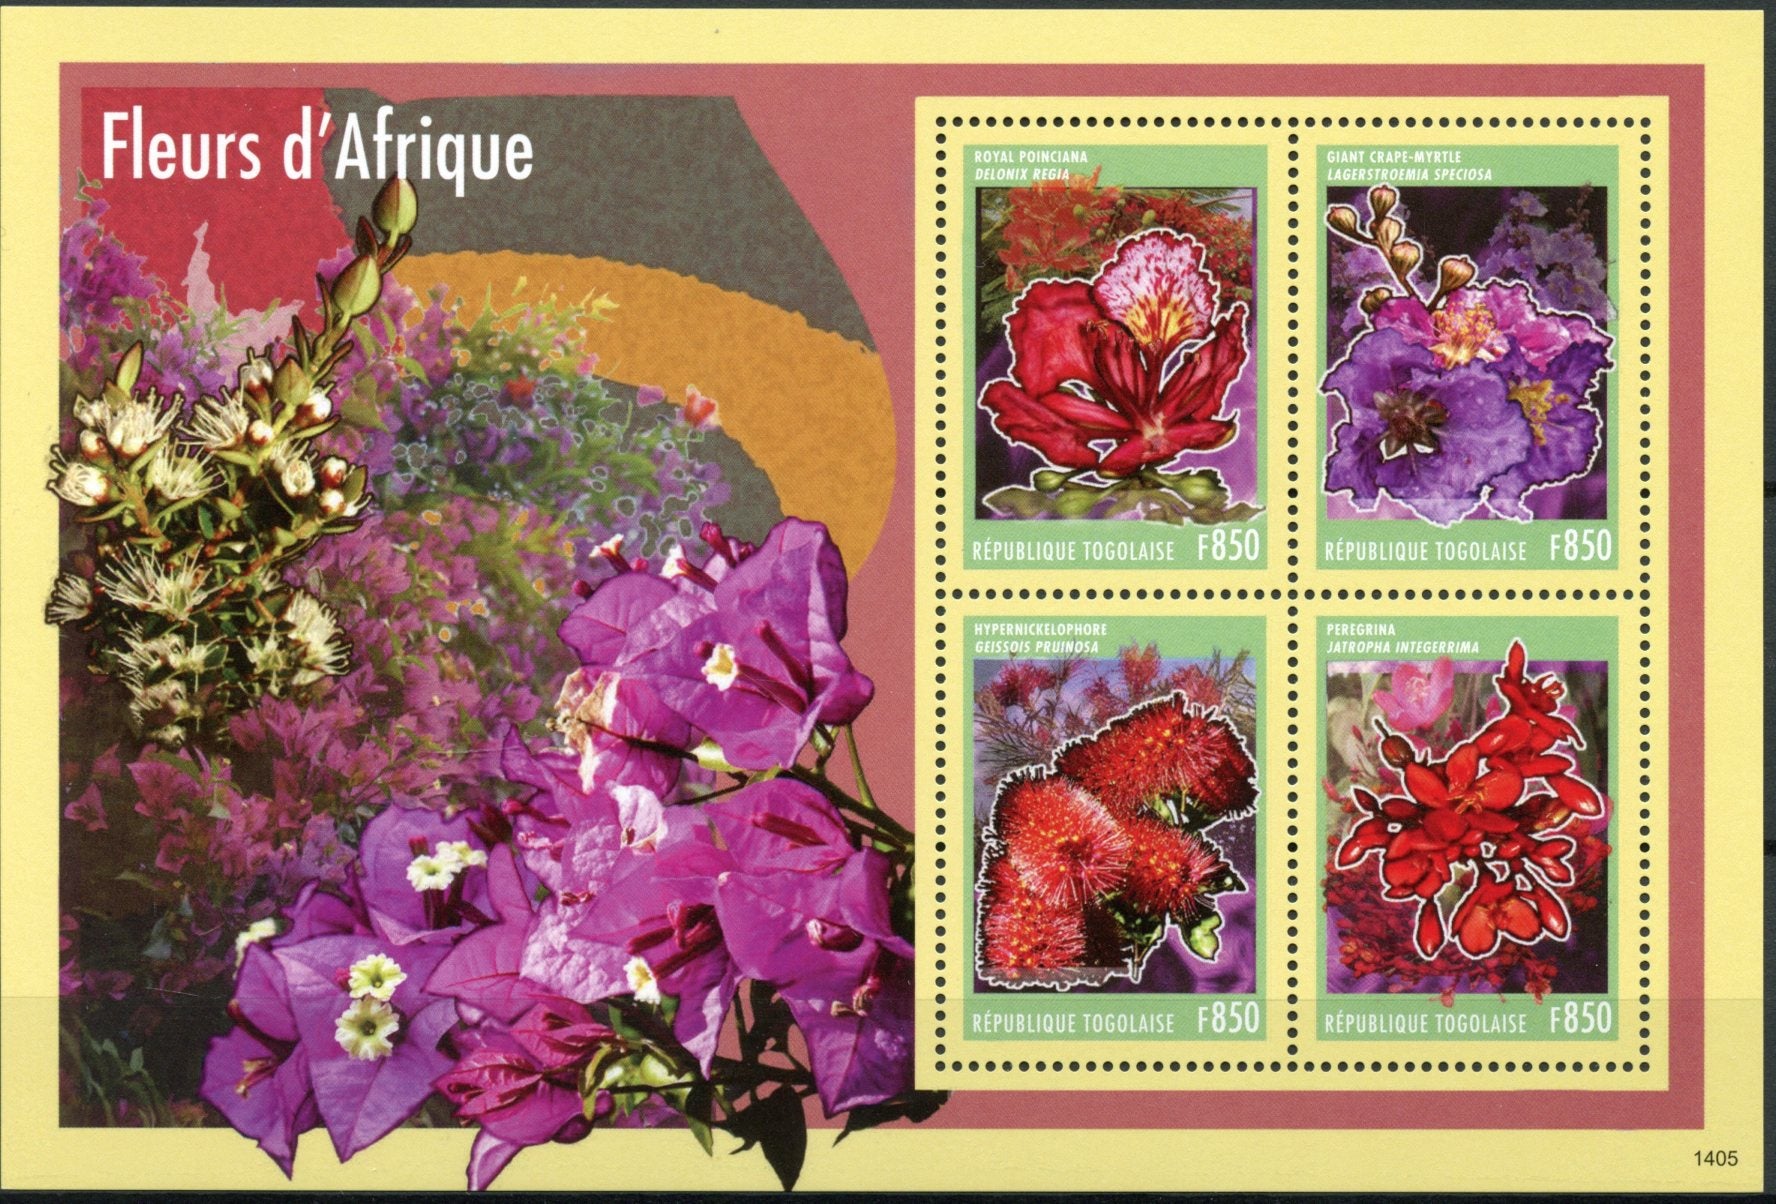 Togo 2014 MNH Flowers of Africa 4v MS Poinciana Flora Fleurs d'Afrique Togolaise